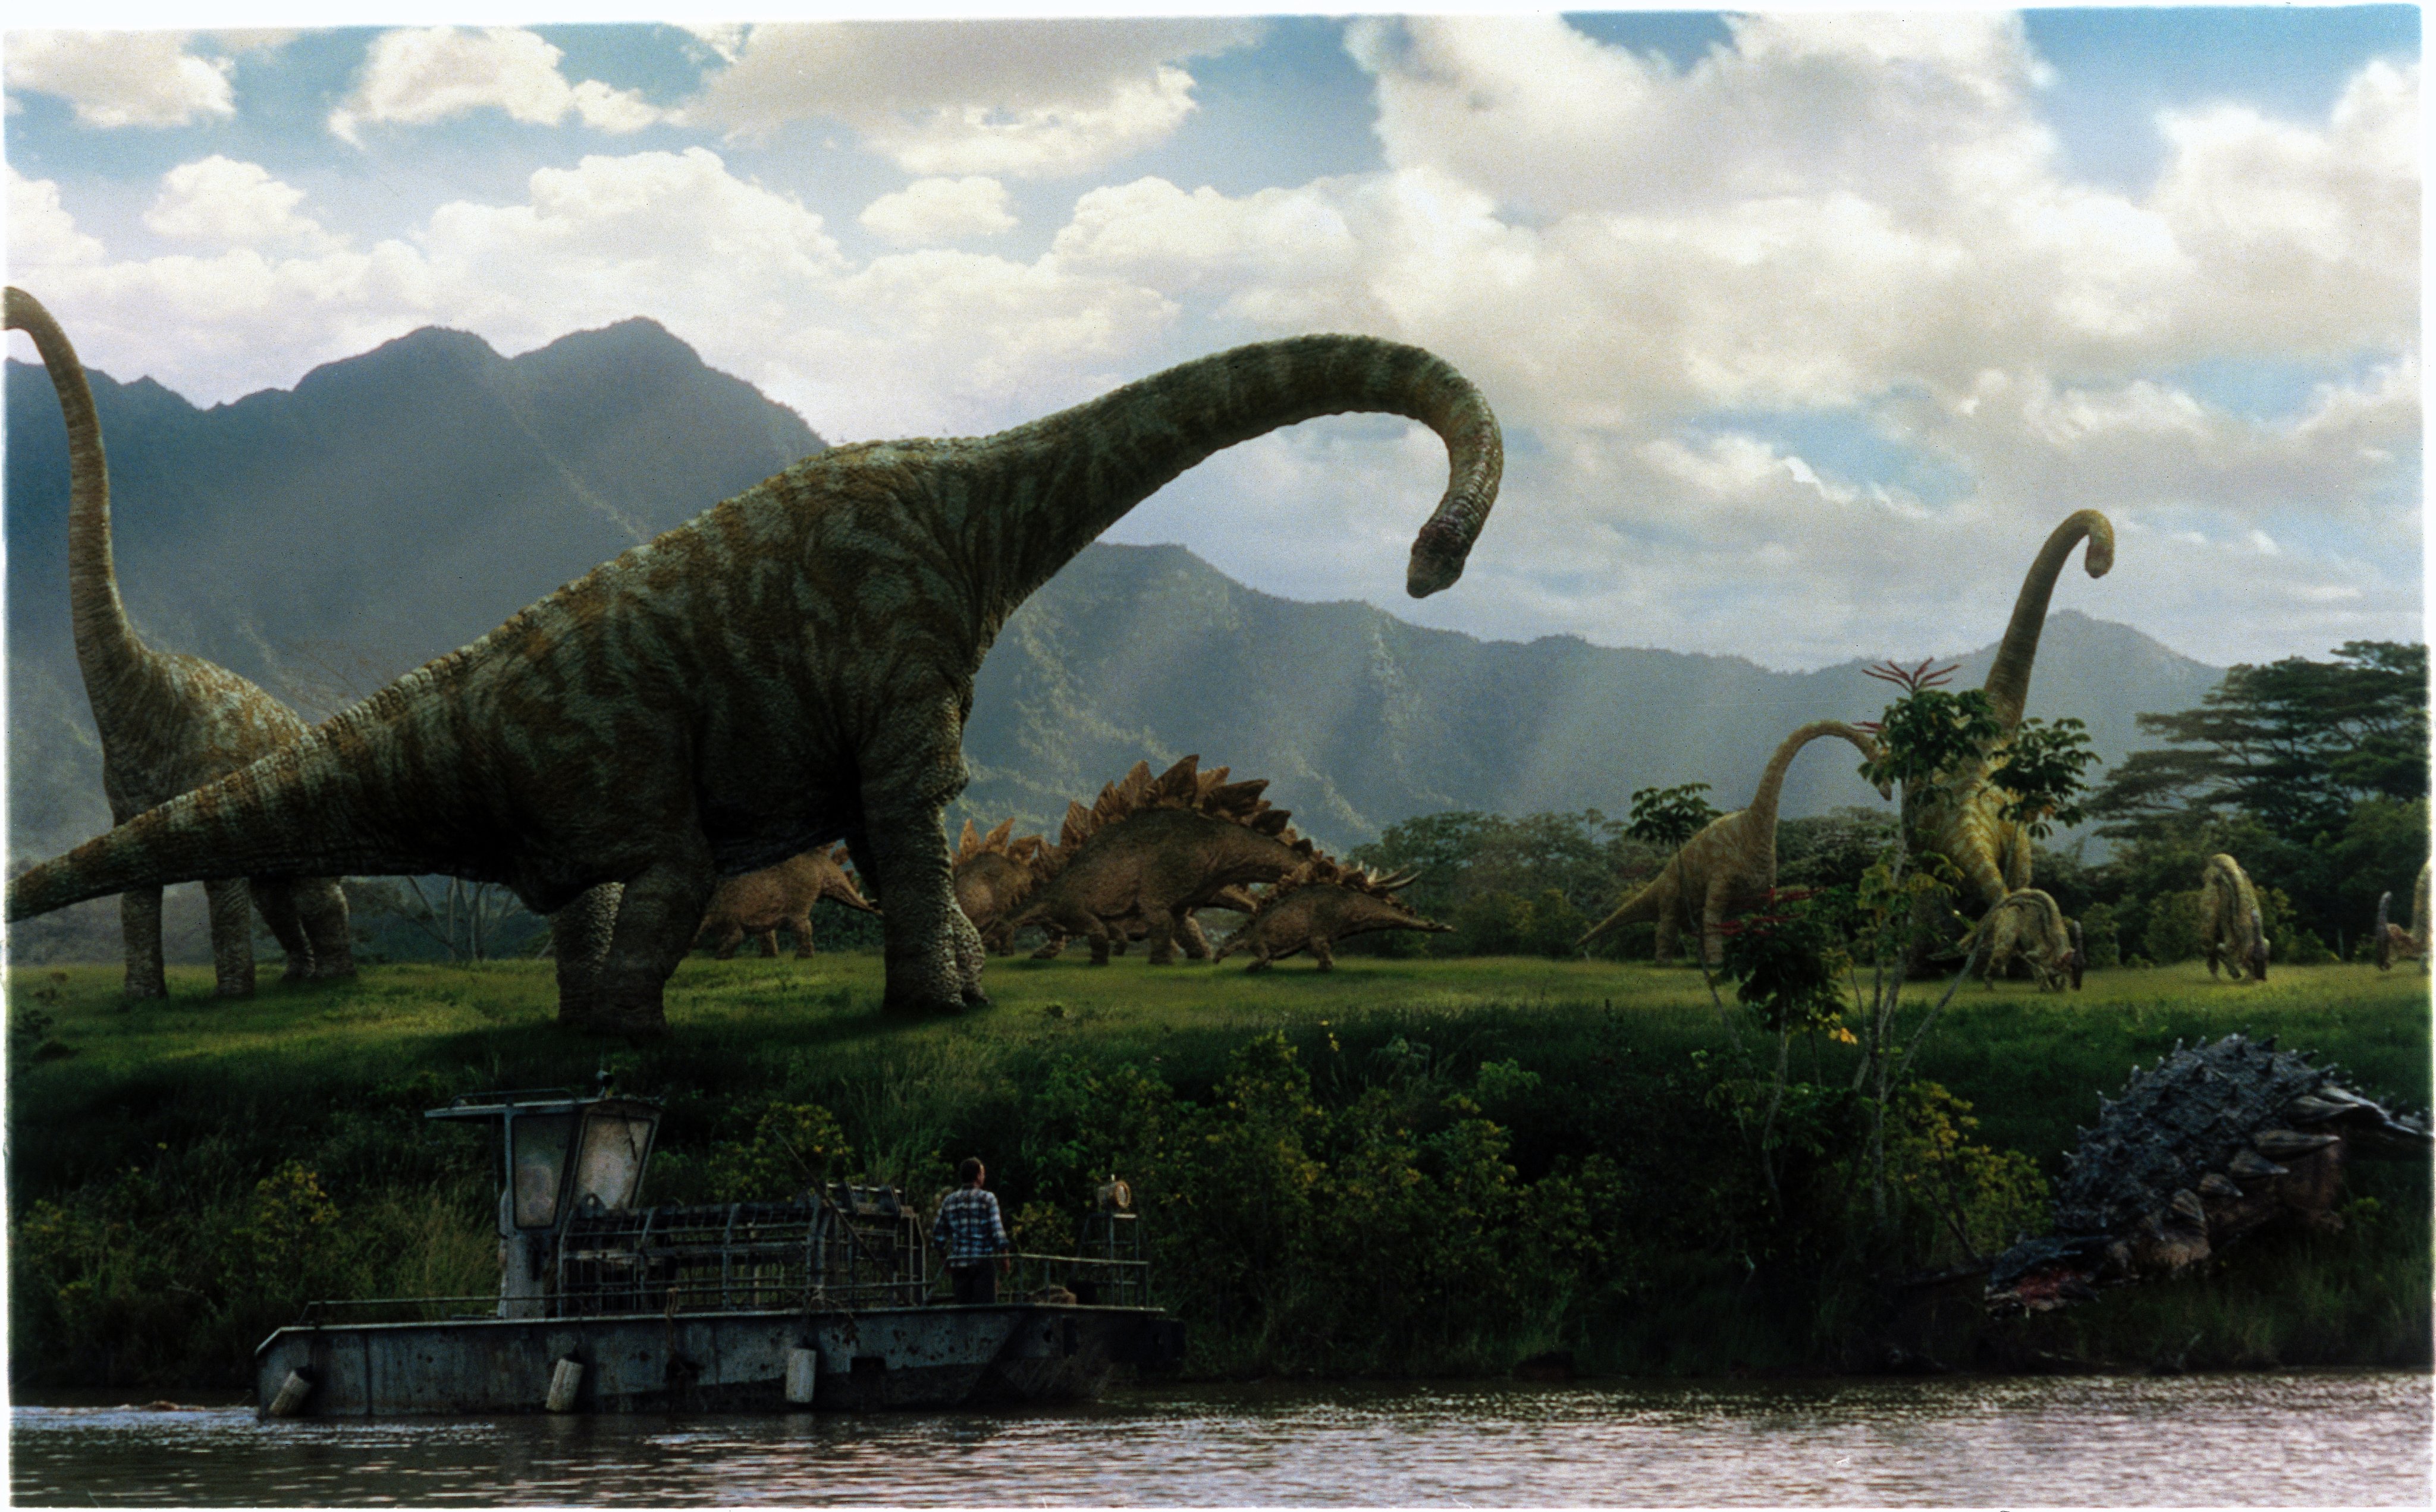 prehistoric kingdom brachiosaurus